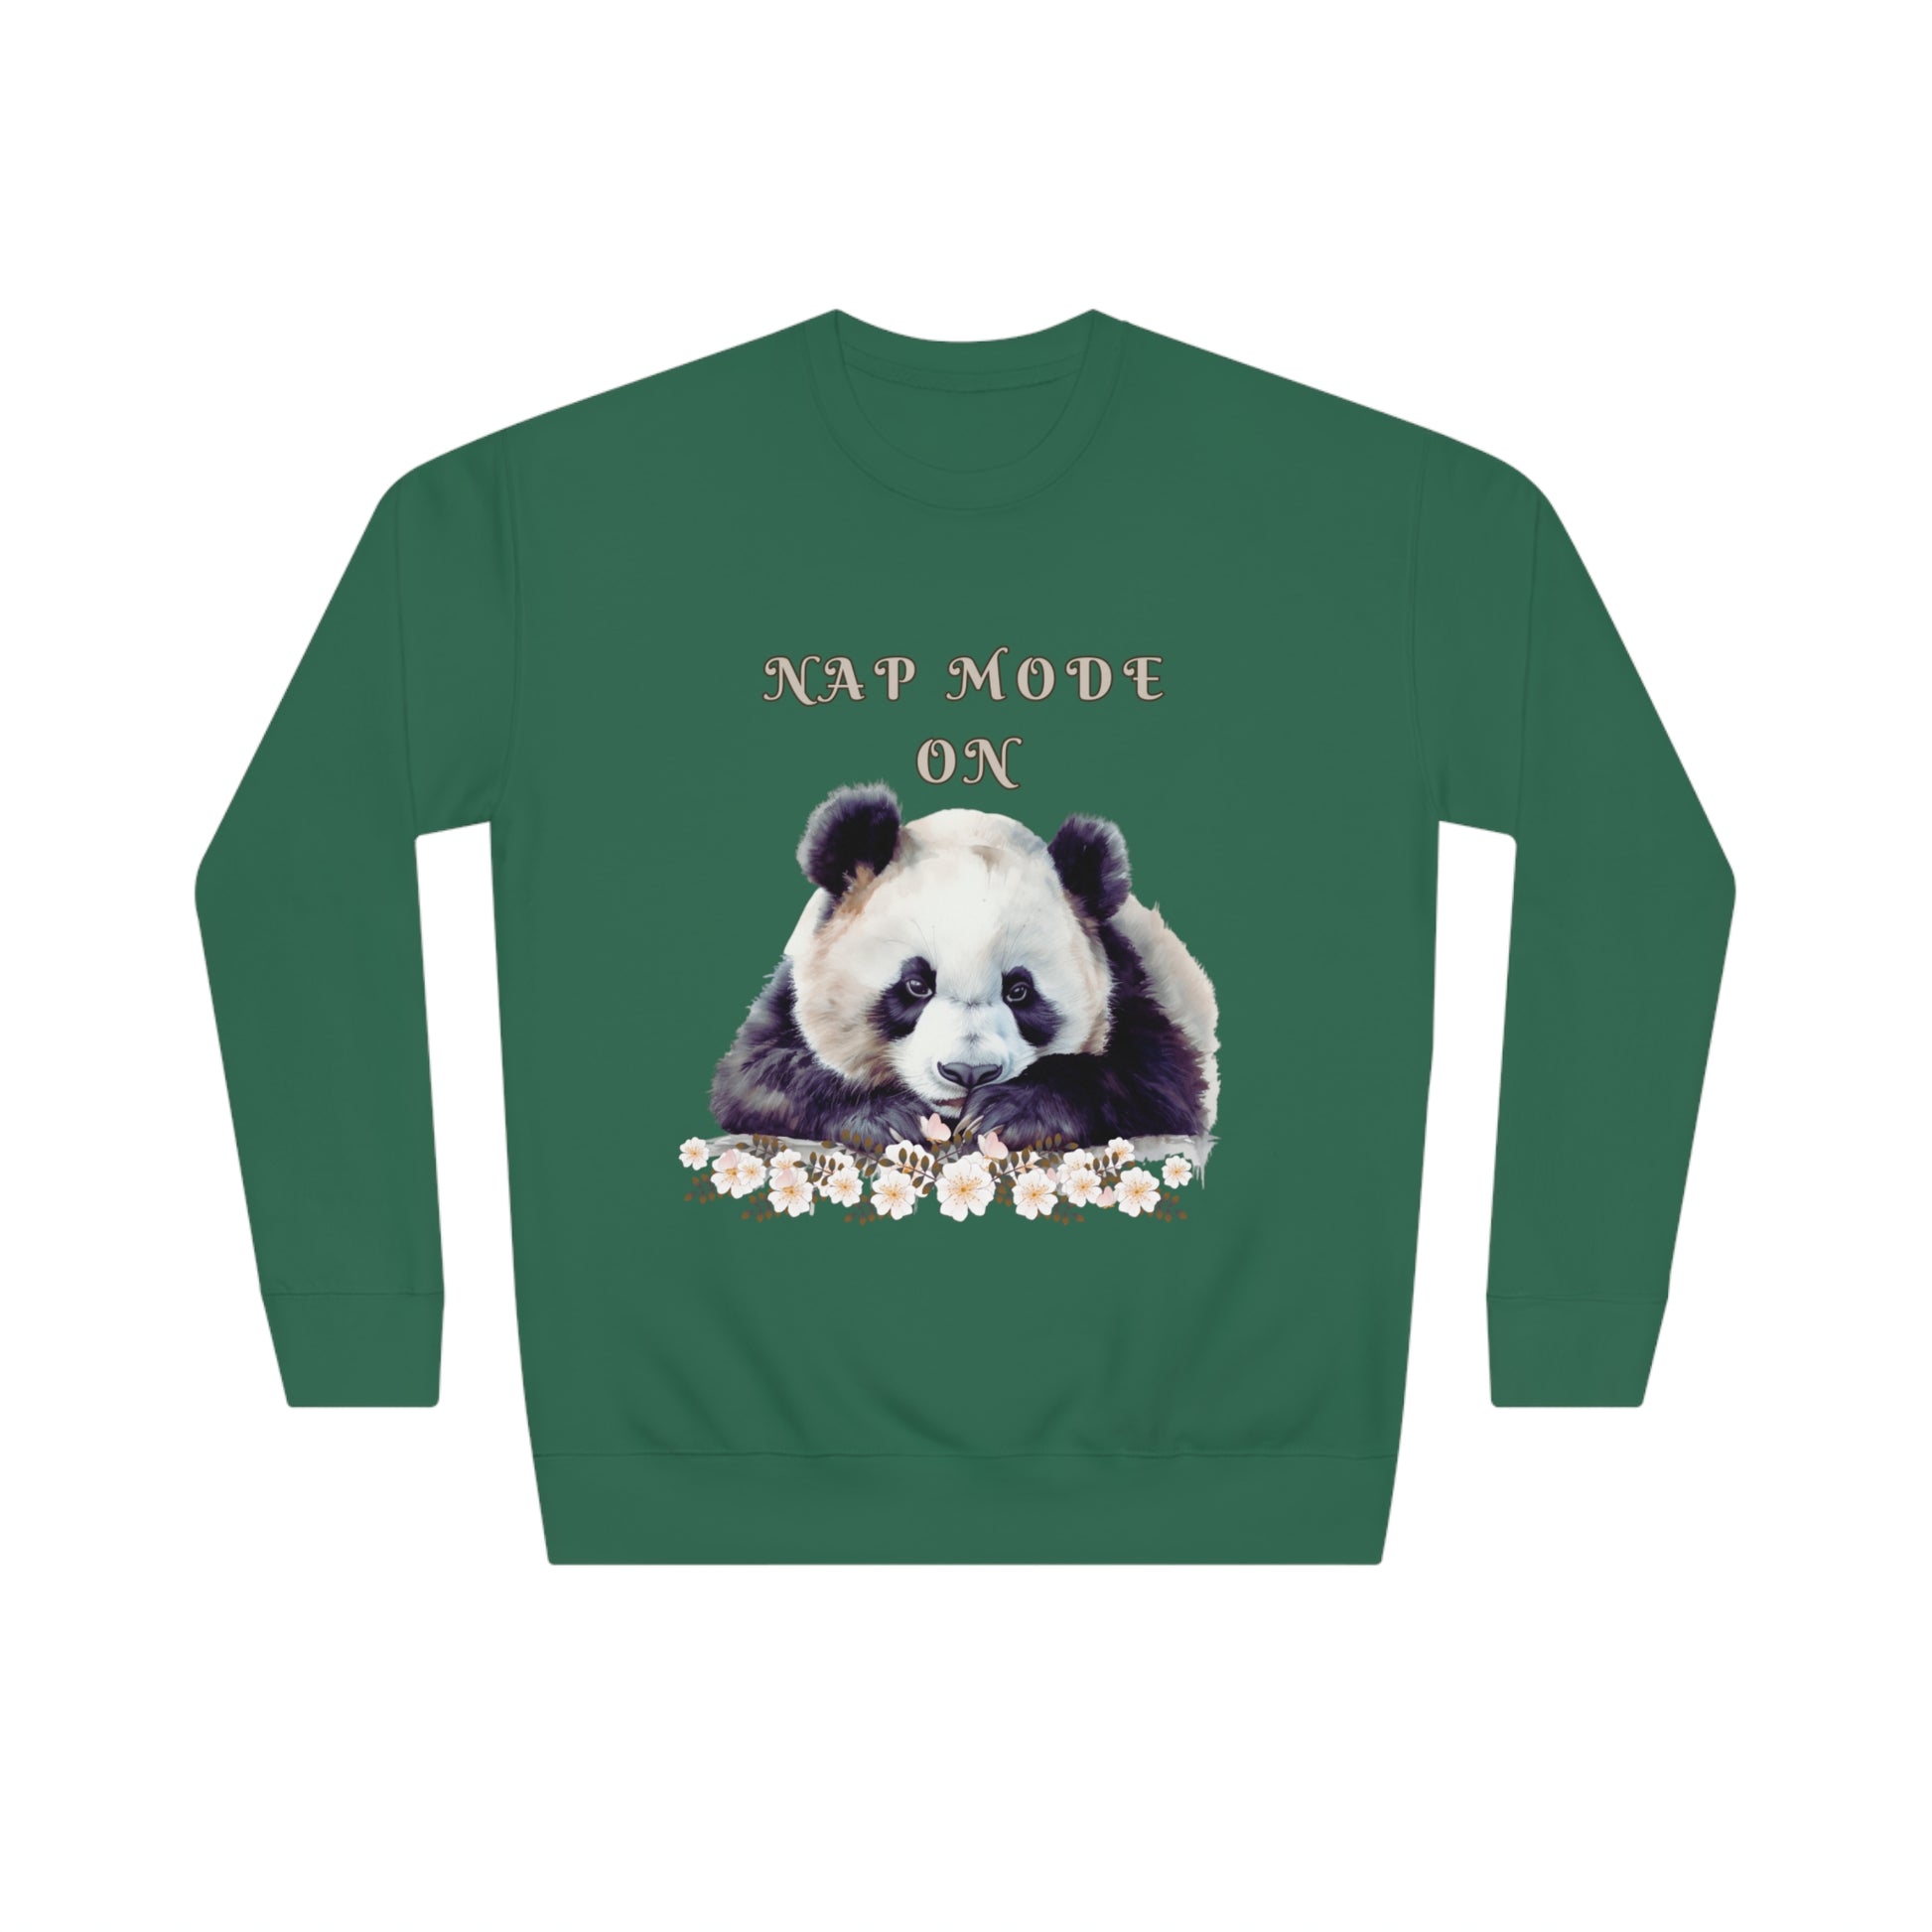 Lazy Panda Nap Mode Sweatshirt | Embrace Cozy Relaxation | Panda Lover Gift - Cozy Sweatshirt Sweatshirt Forest Green 2XL 